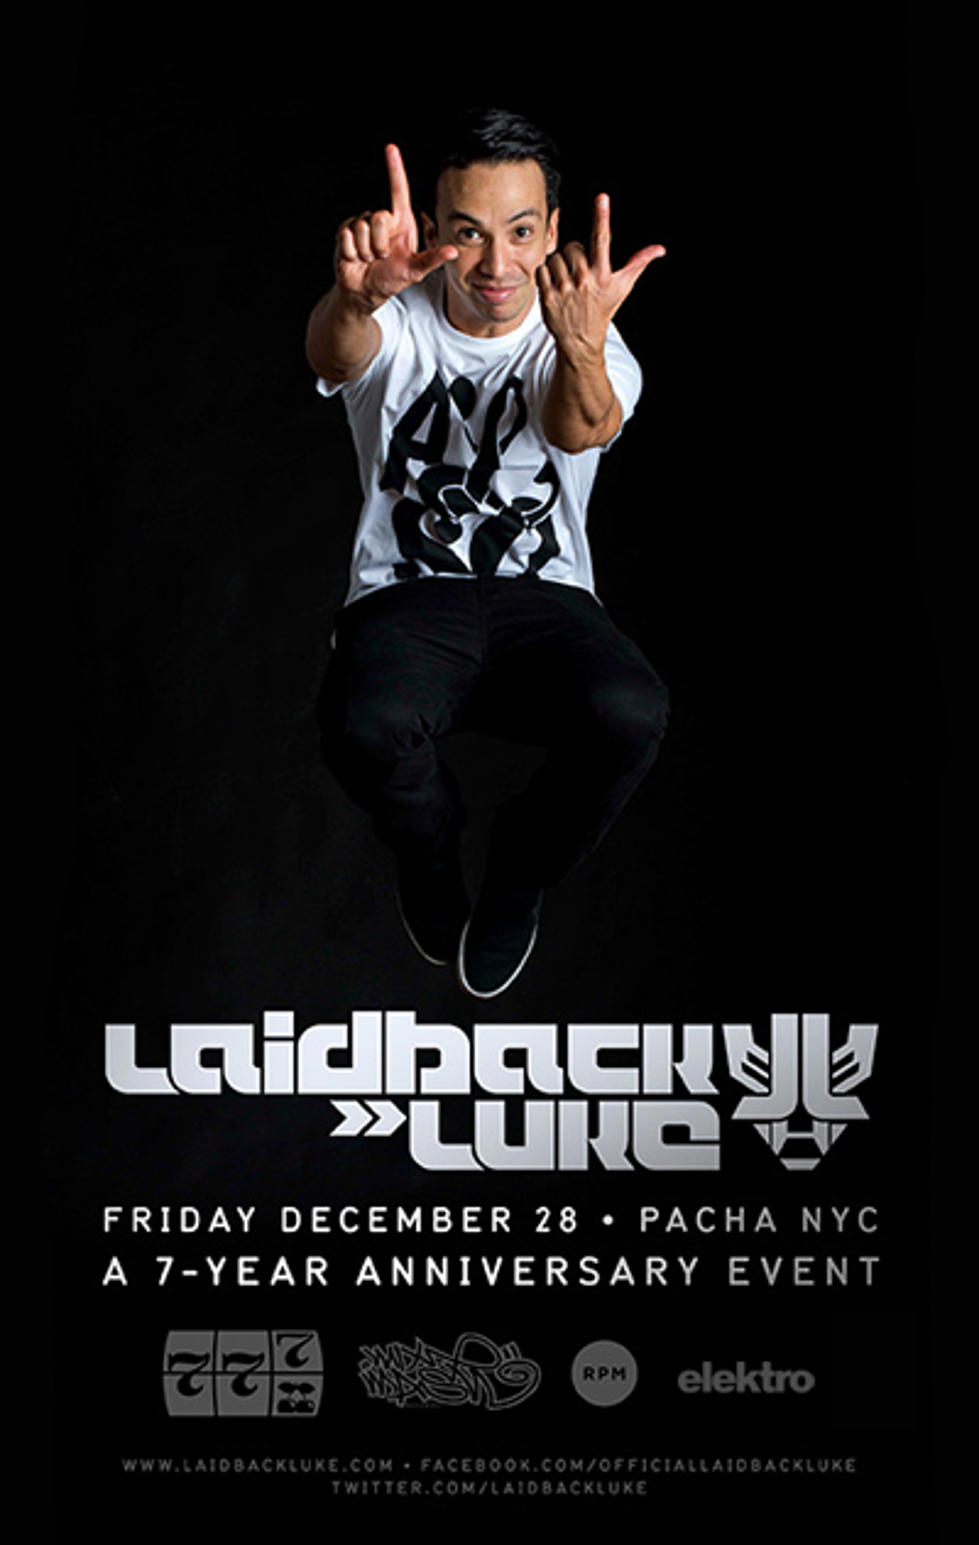 elektro x Pacha NYC 7 Year Anniversary Celebration Contest Part 5 w/ Laidback Luke Dec 28th